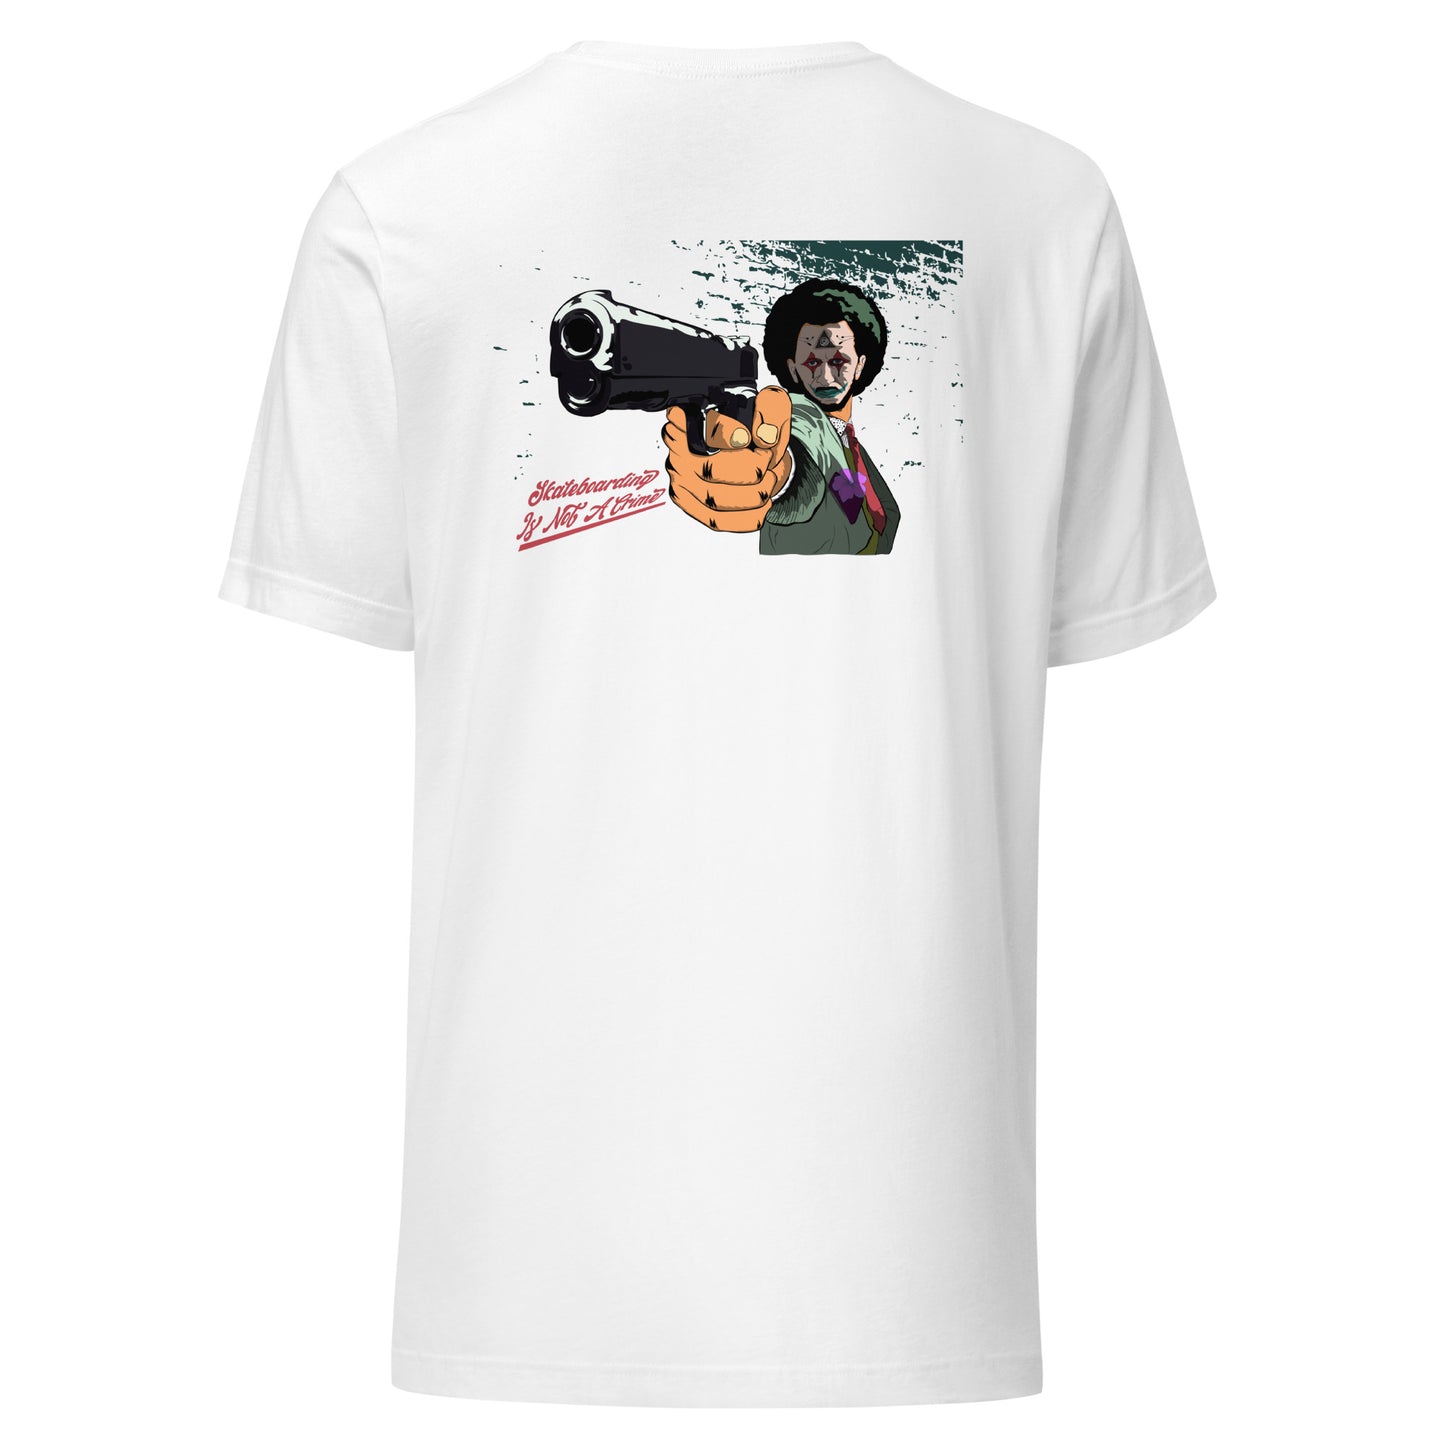 T-Shirt Skateboarding Is Not A Crime design joker dos tshirt couleur blanc